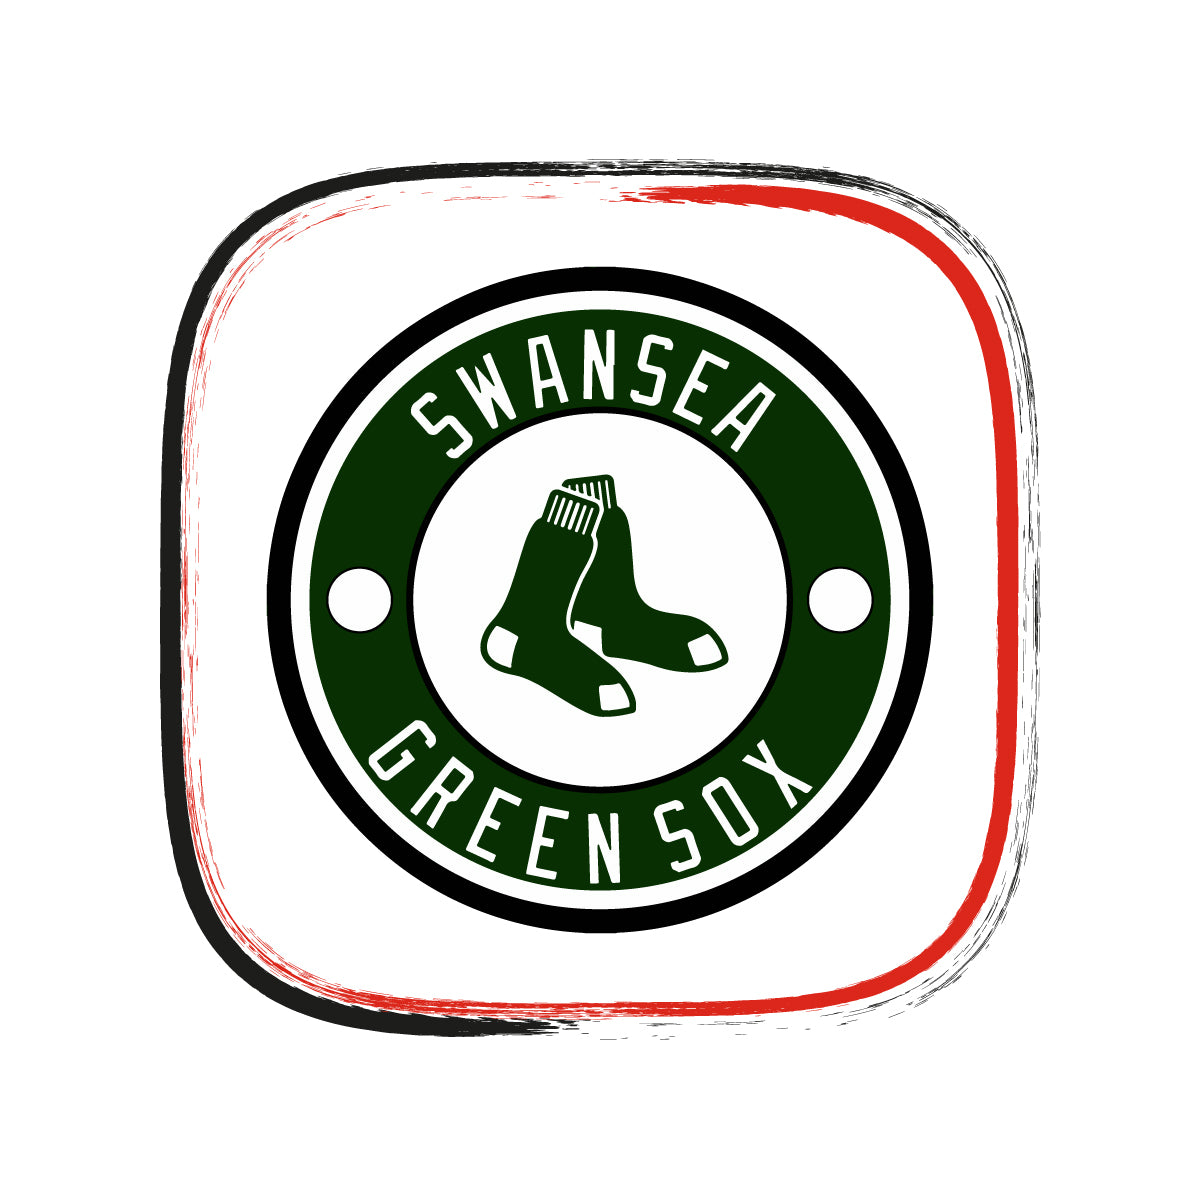 Swansea Greensox